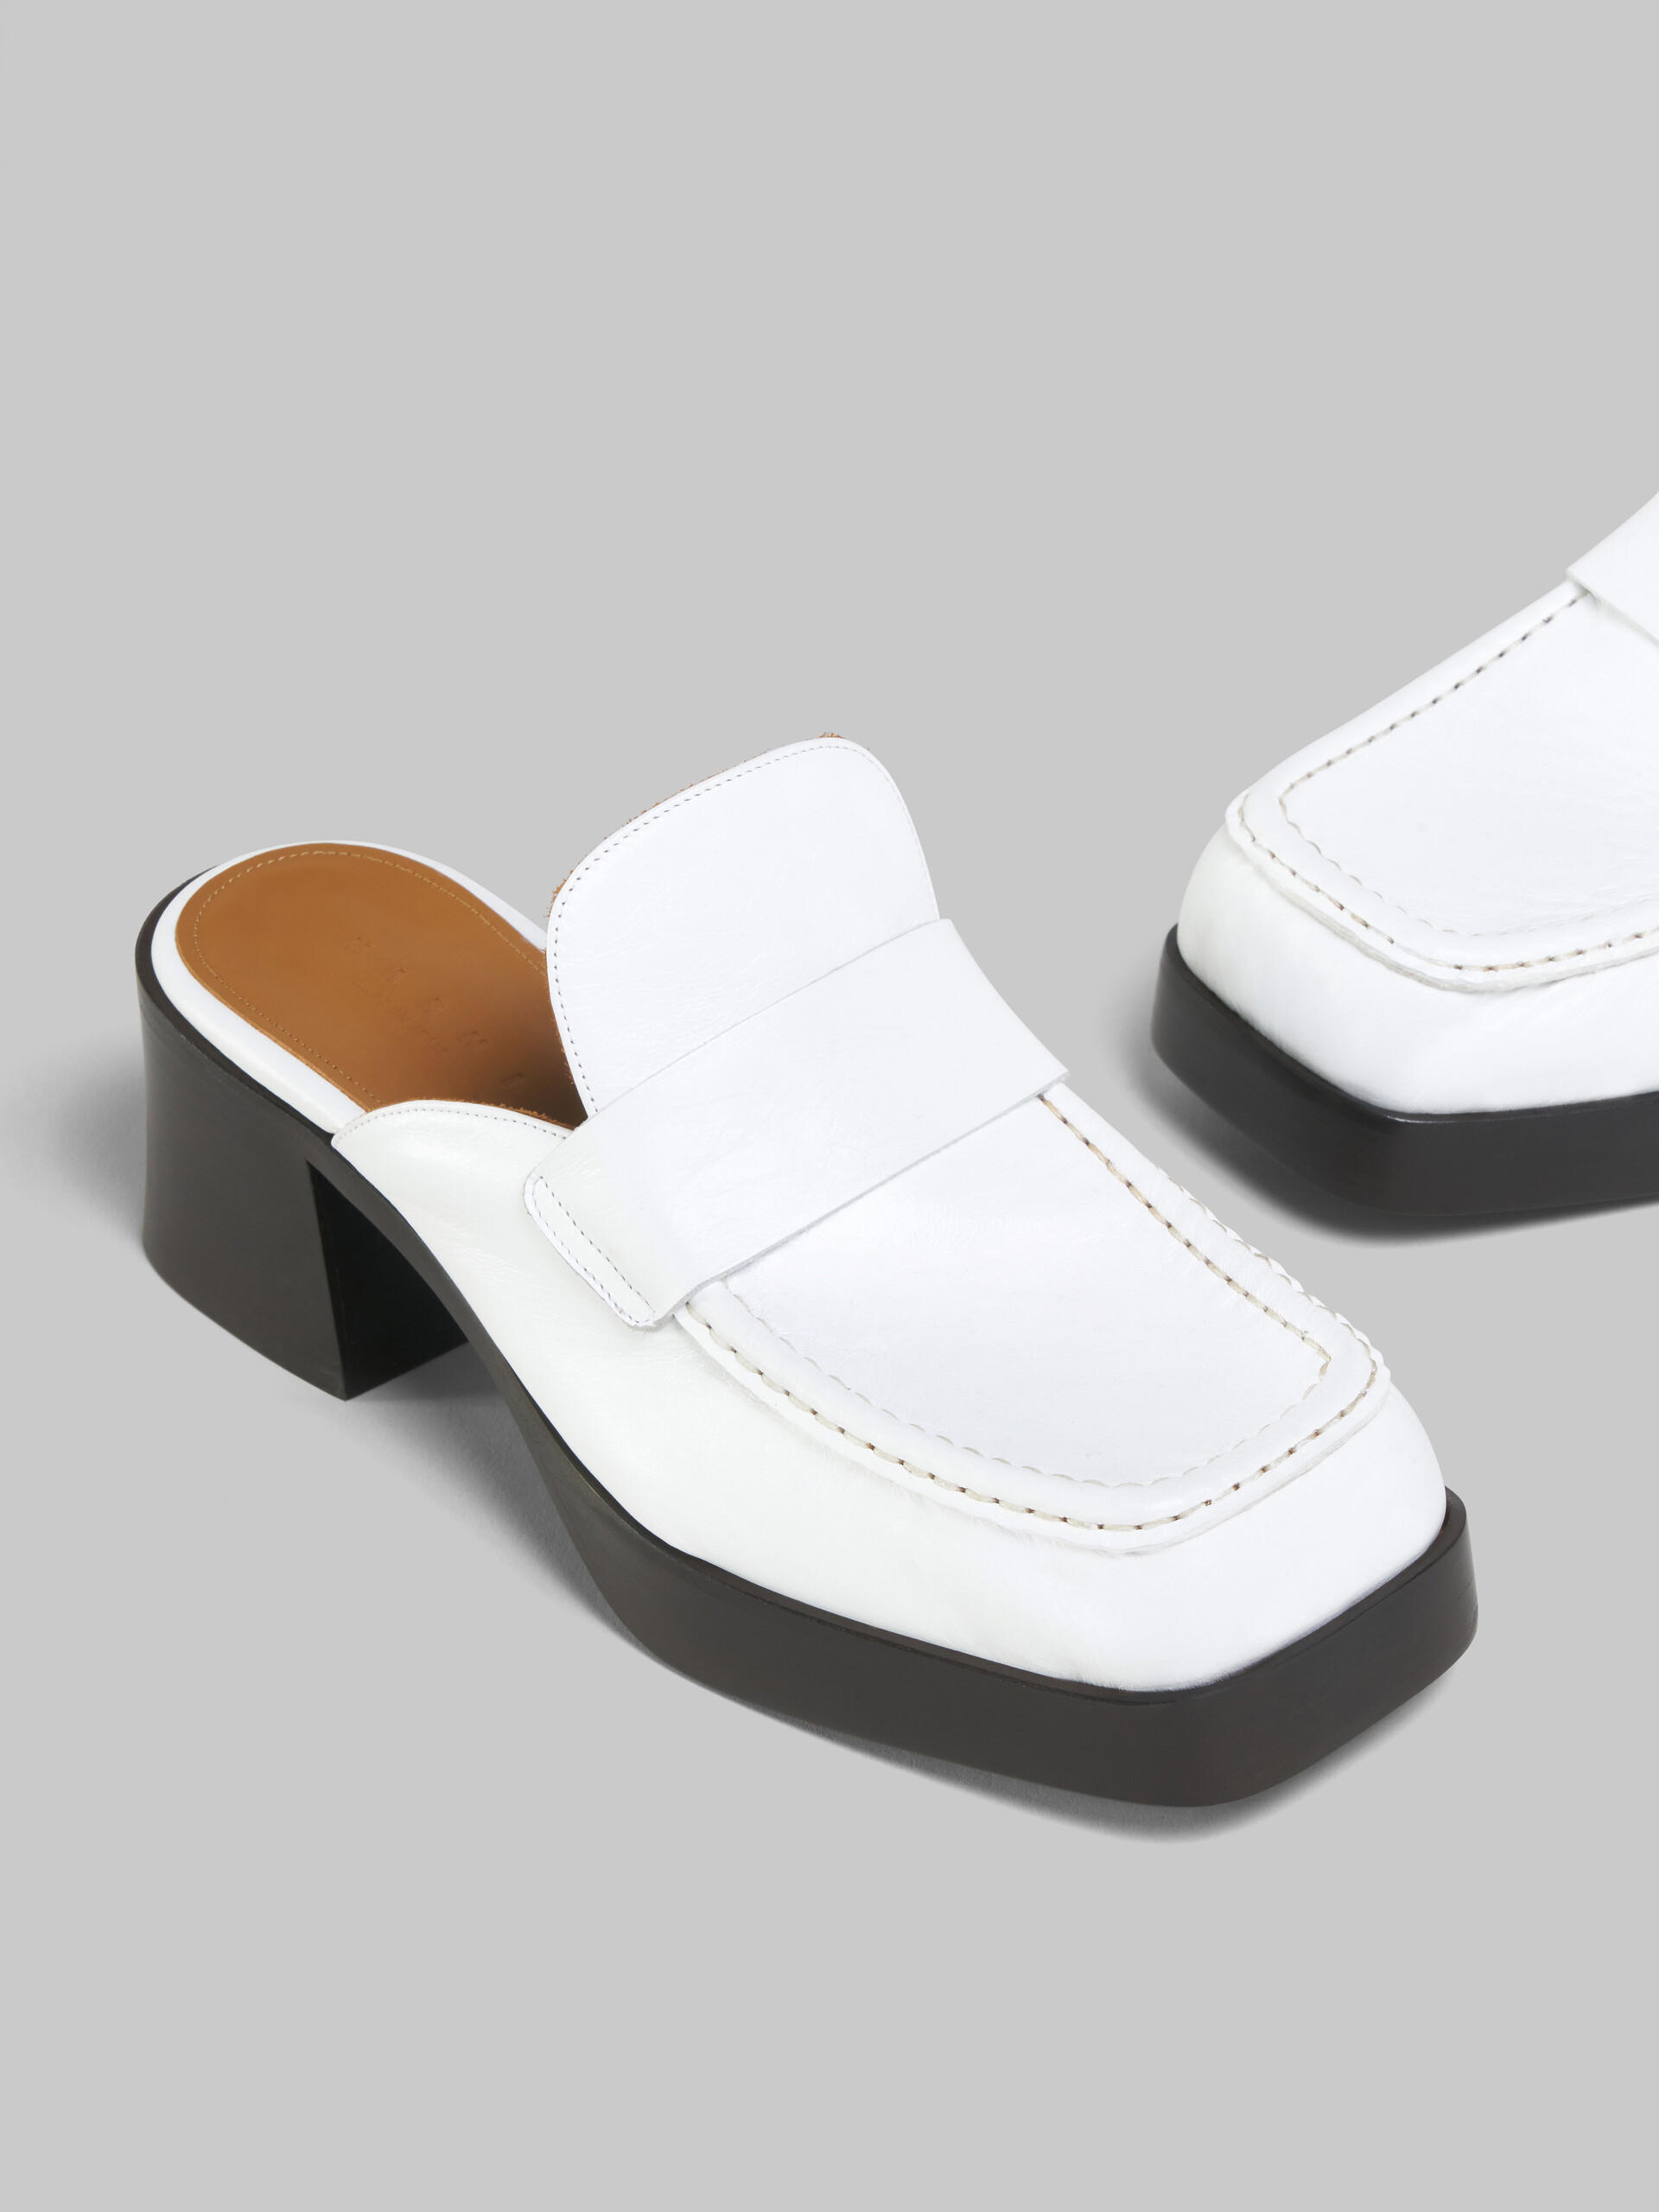 White leather heeled mule - Clogs - Image 5